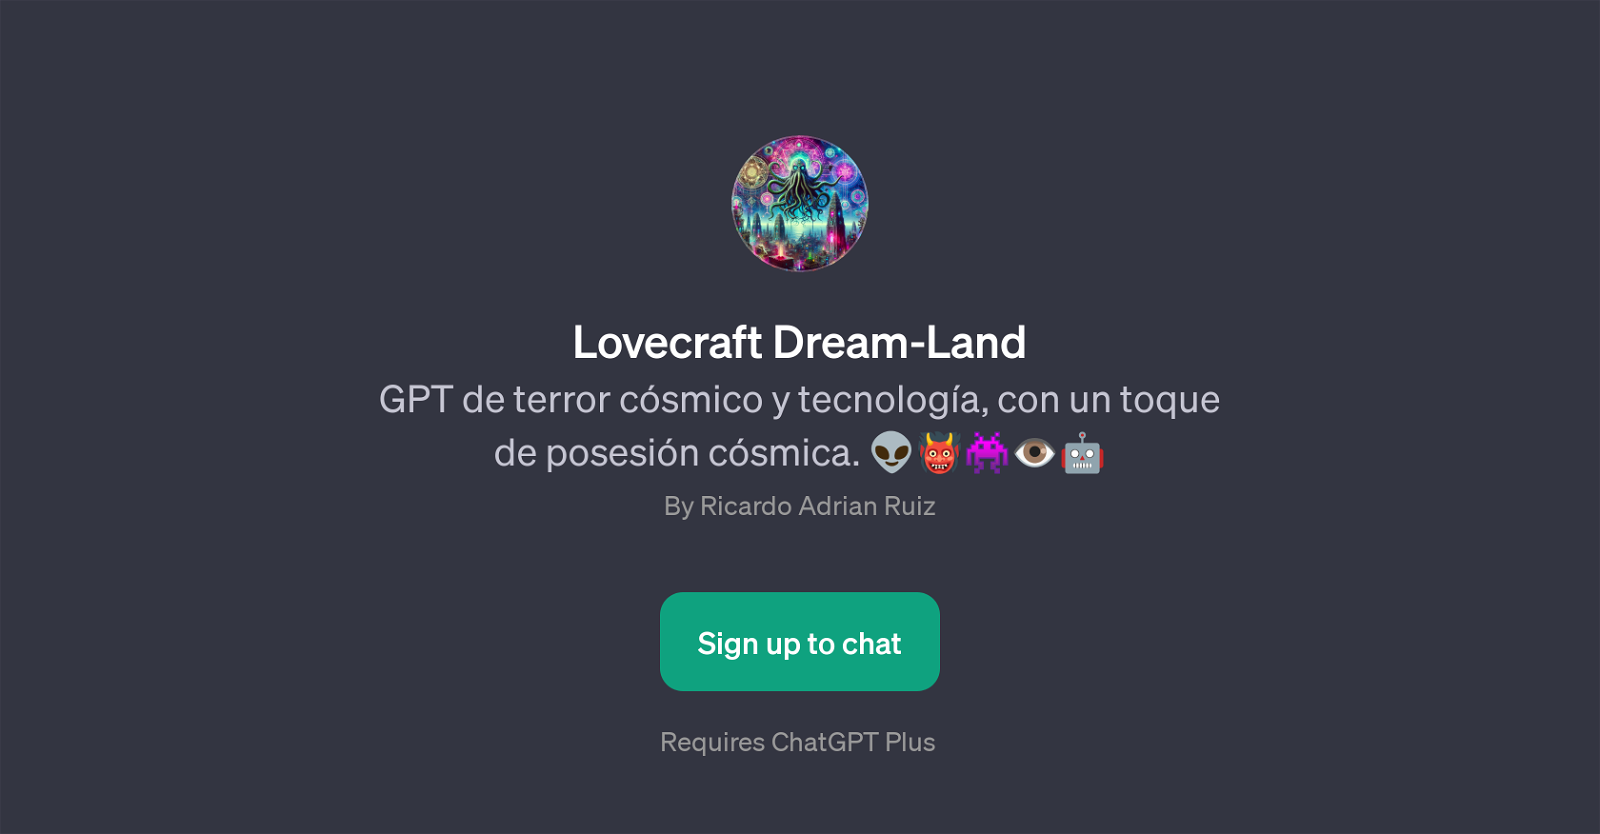 Lovecraft Dream-Land website